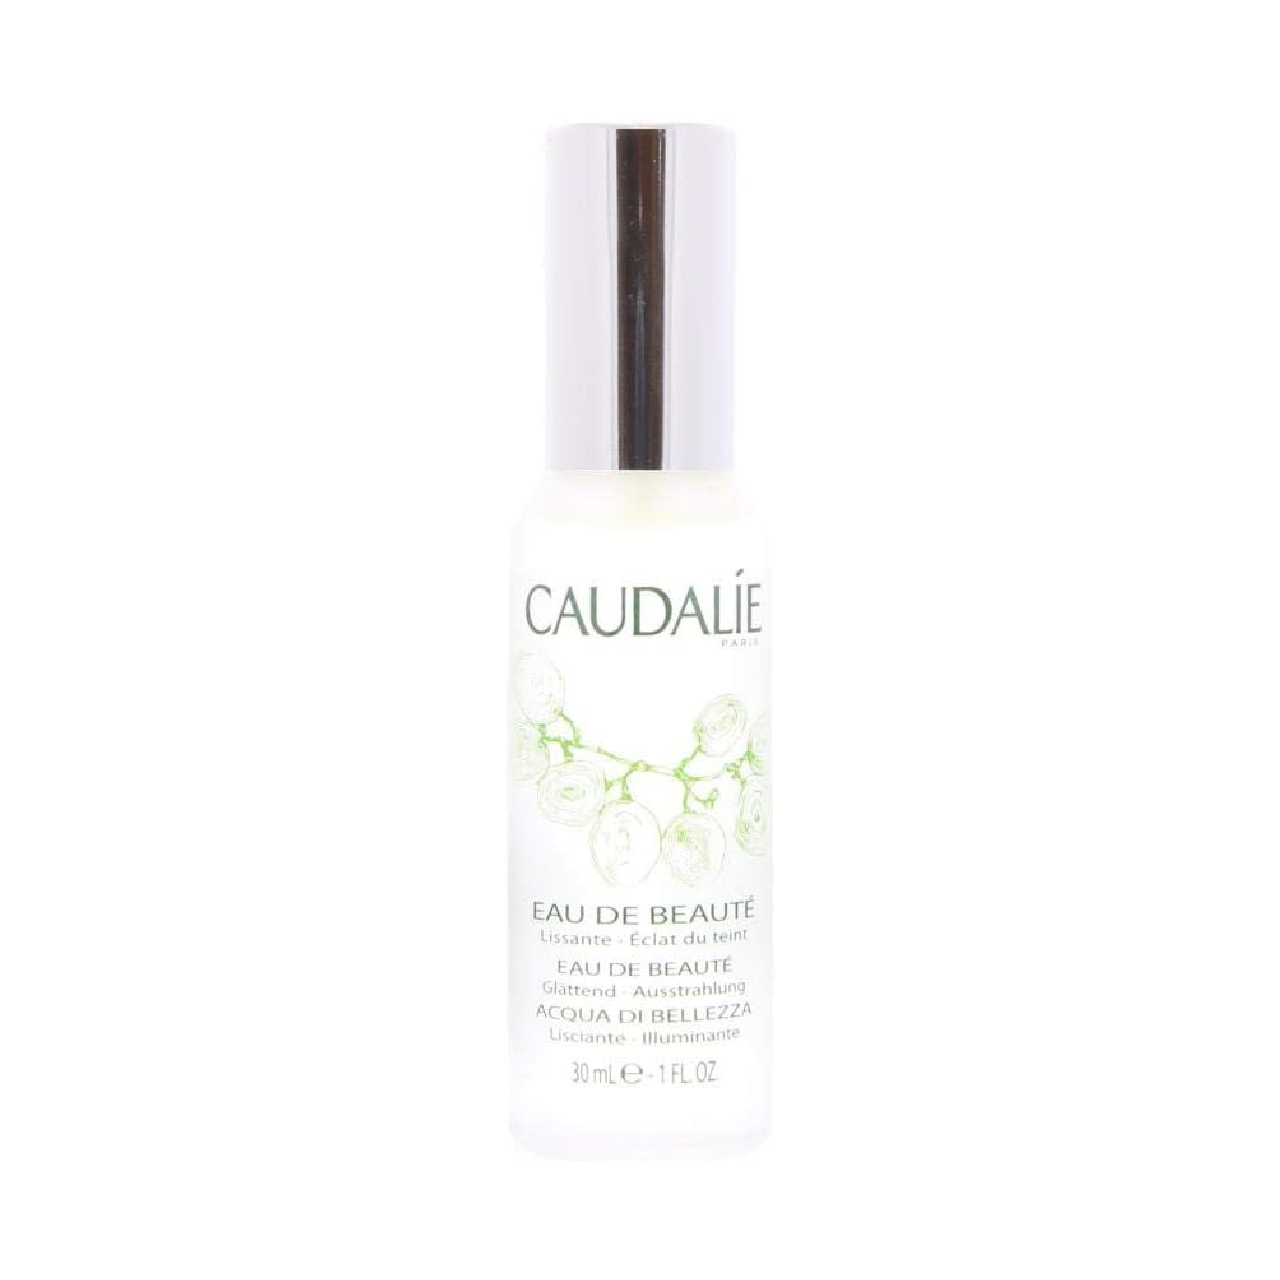 Bottle of Caudalie Beauty Elixir against a white background